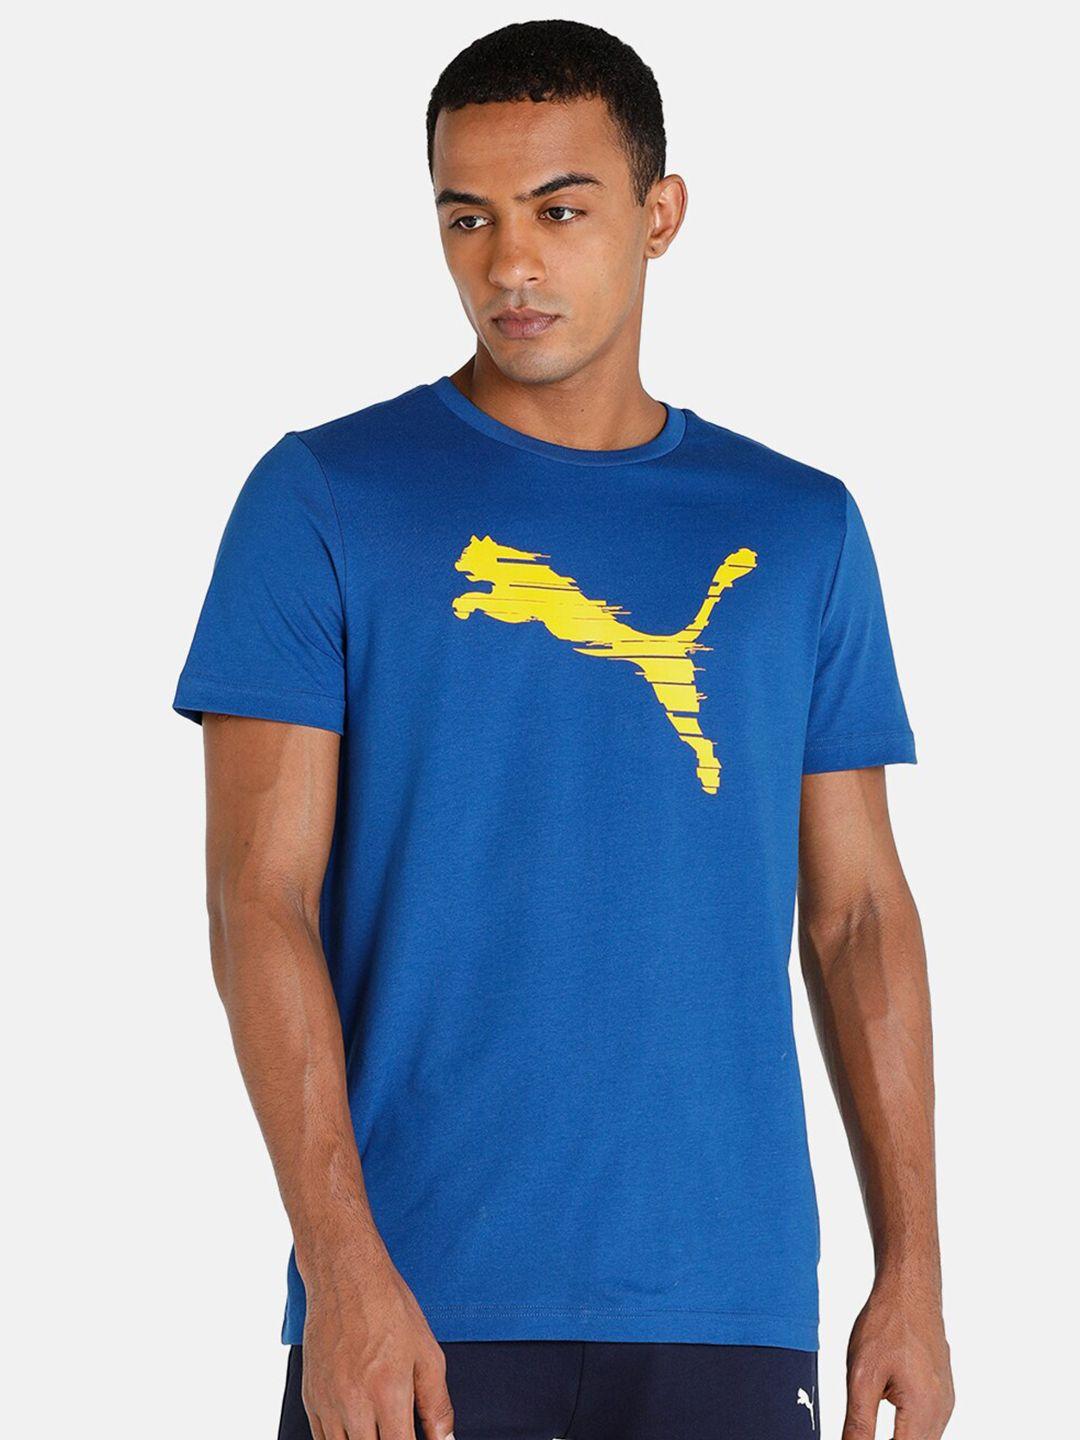 puma men blue & yellow shaded cat printed slim fit sports t-shirt